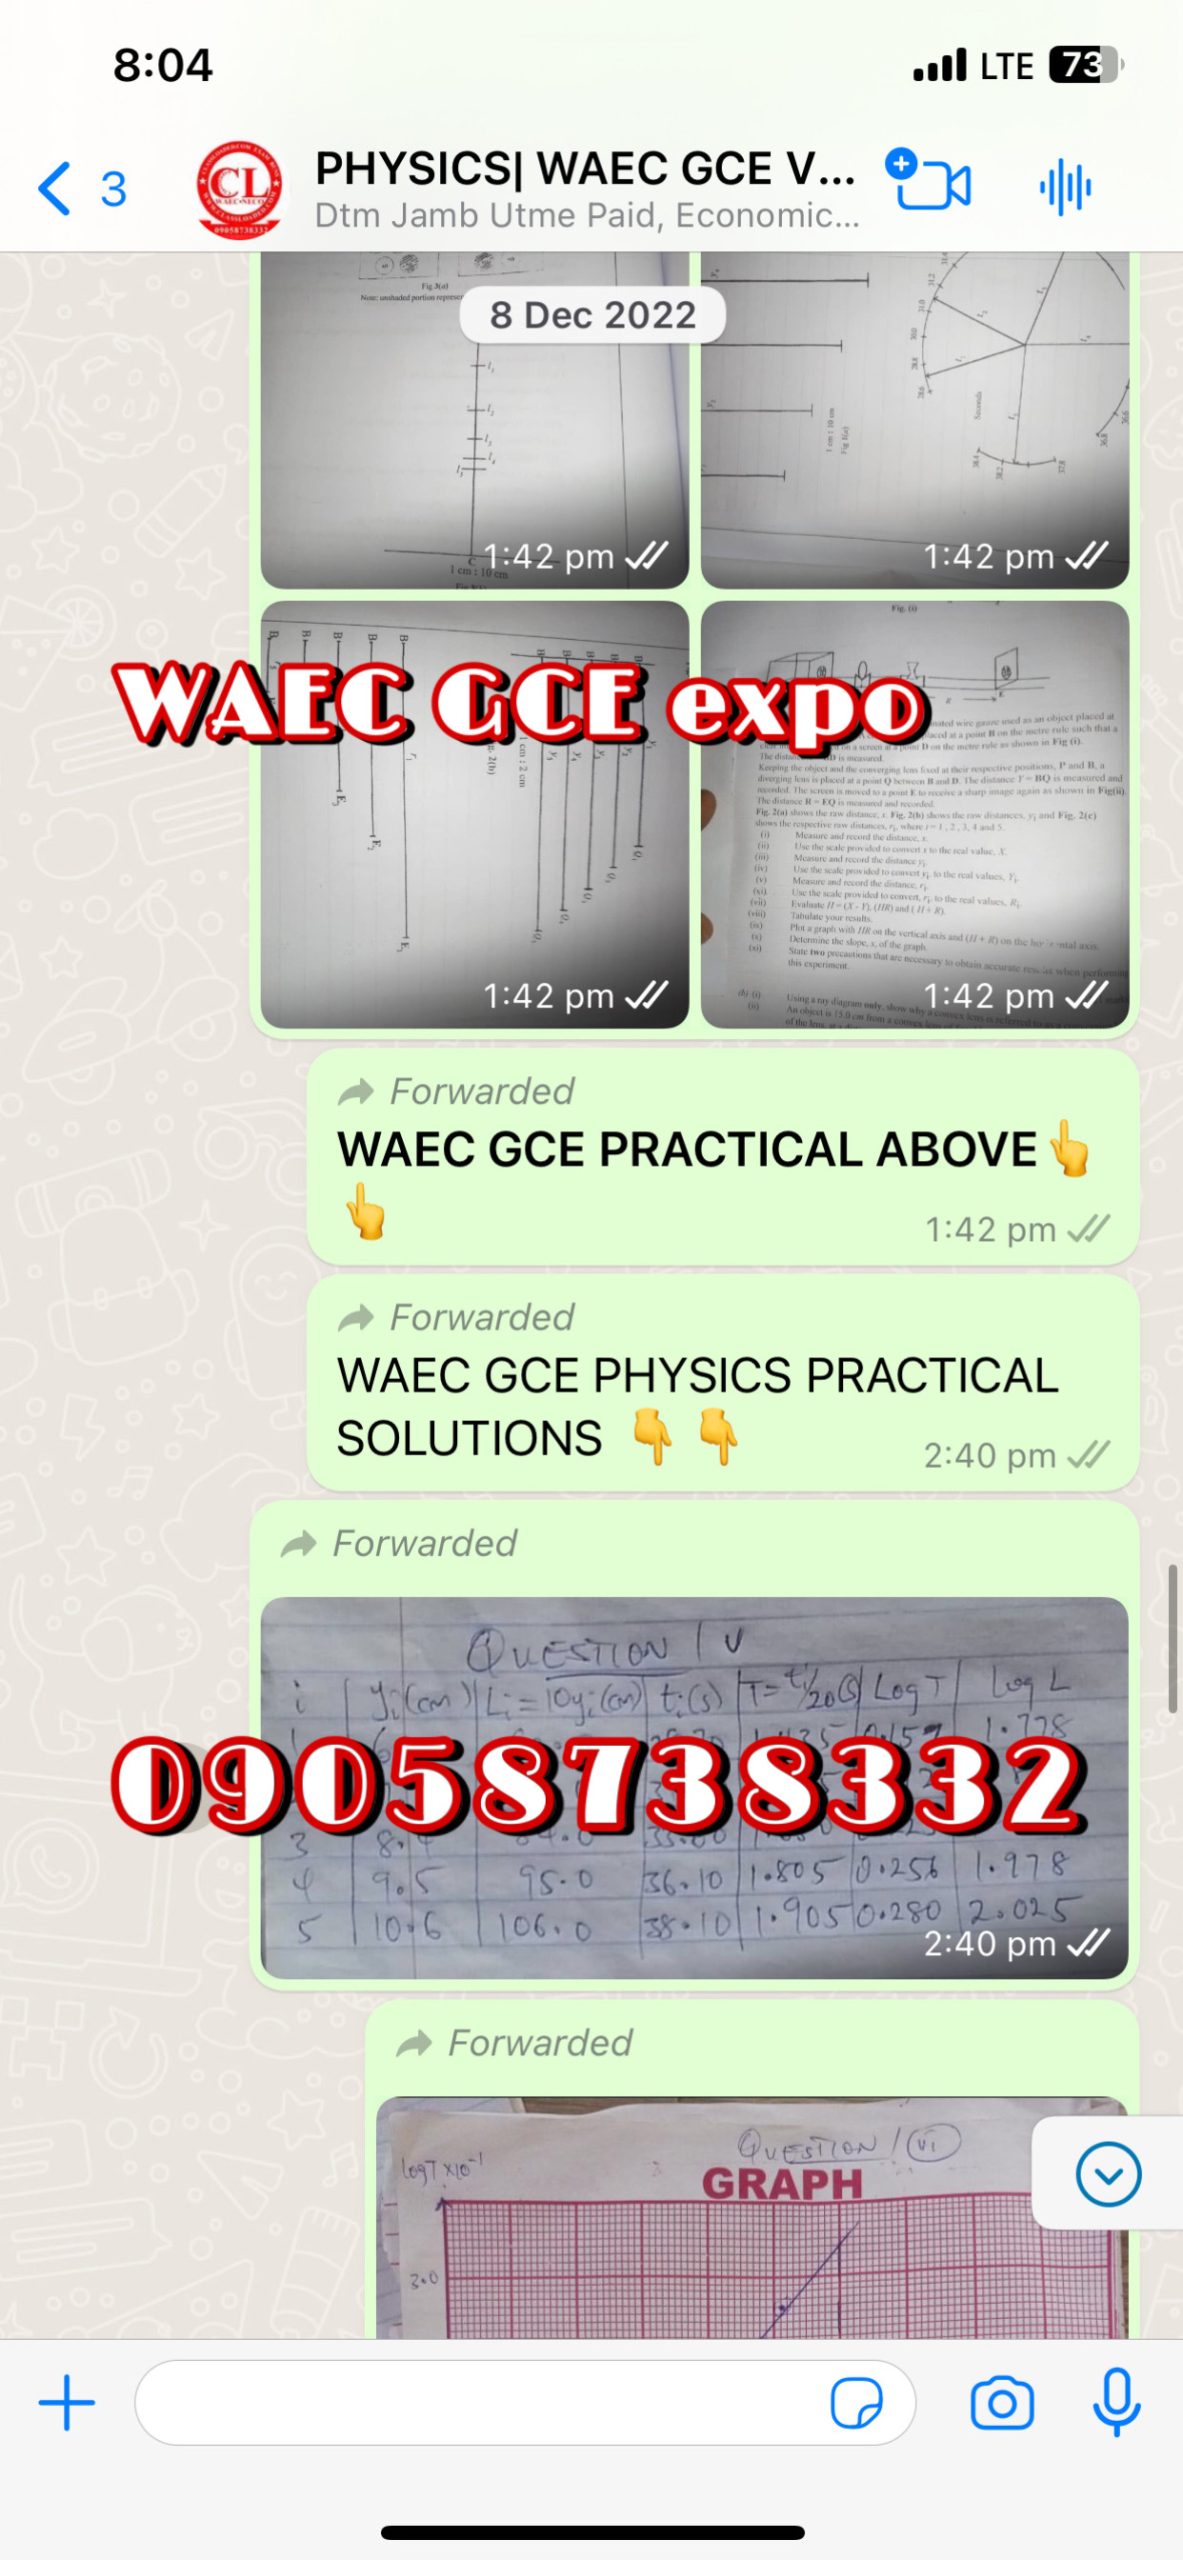 WAEC GCE Expo 2023 / 2023 Waec Gce Runz / Waec Gce 2023 Chokes - Second Series